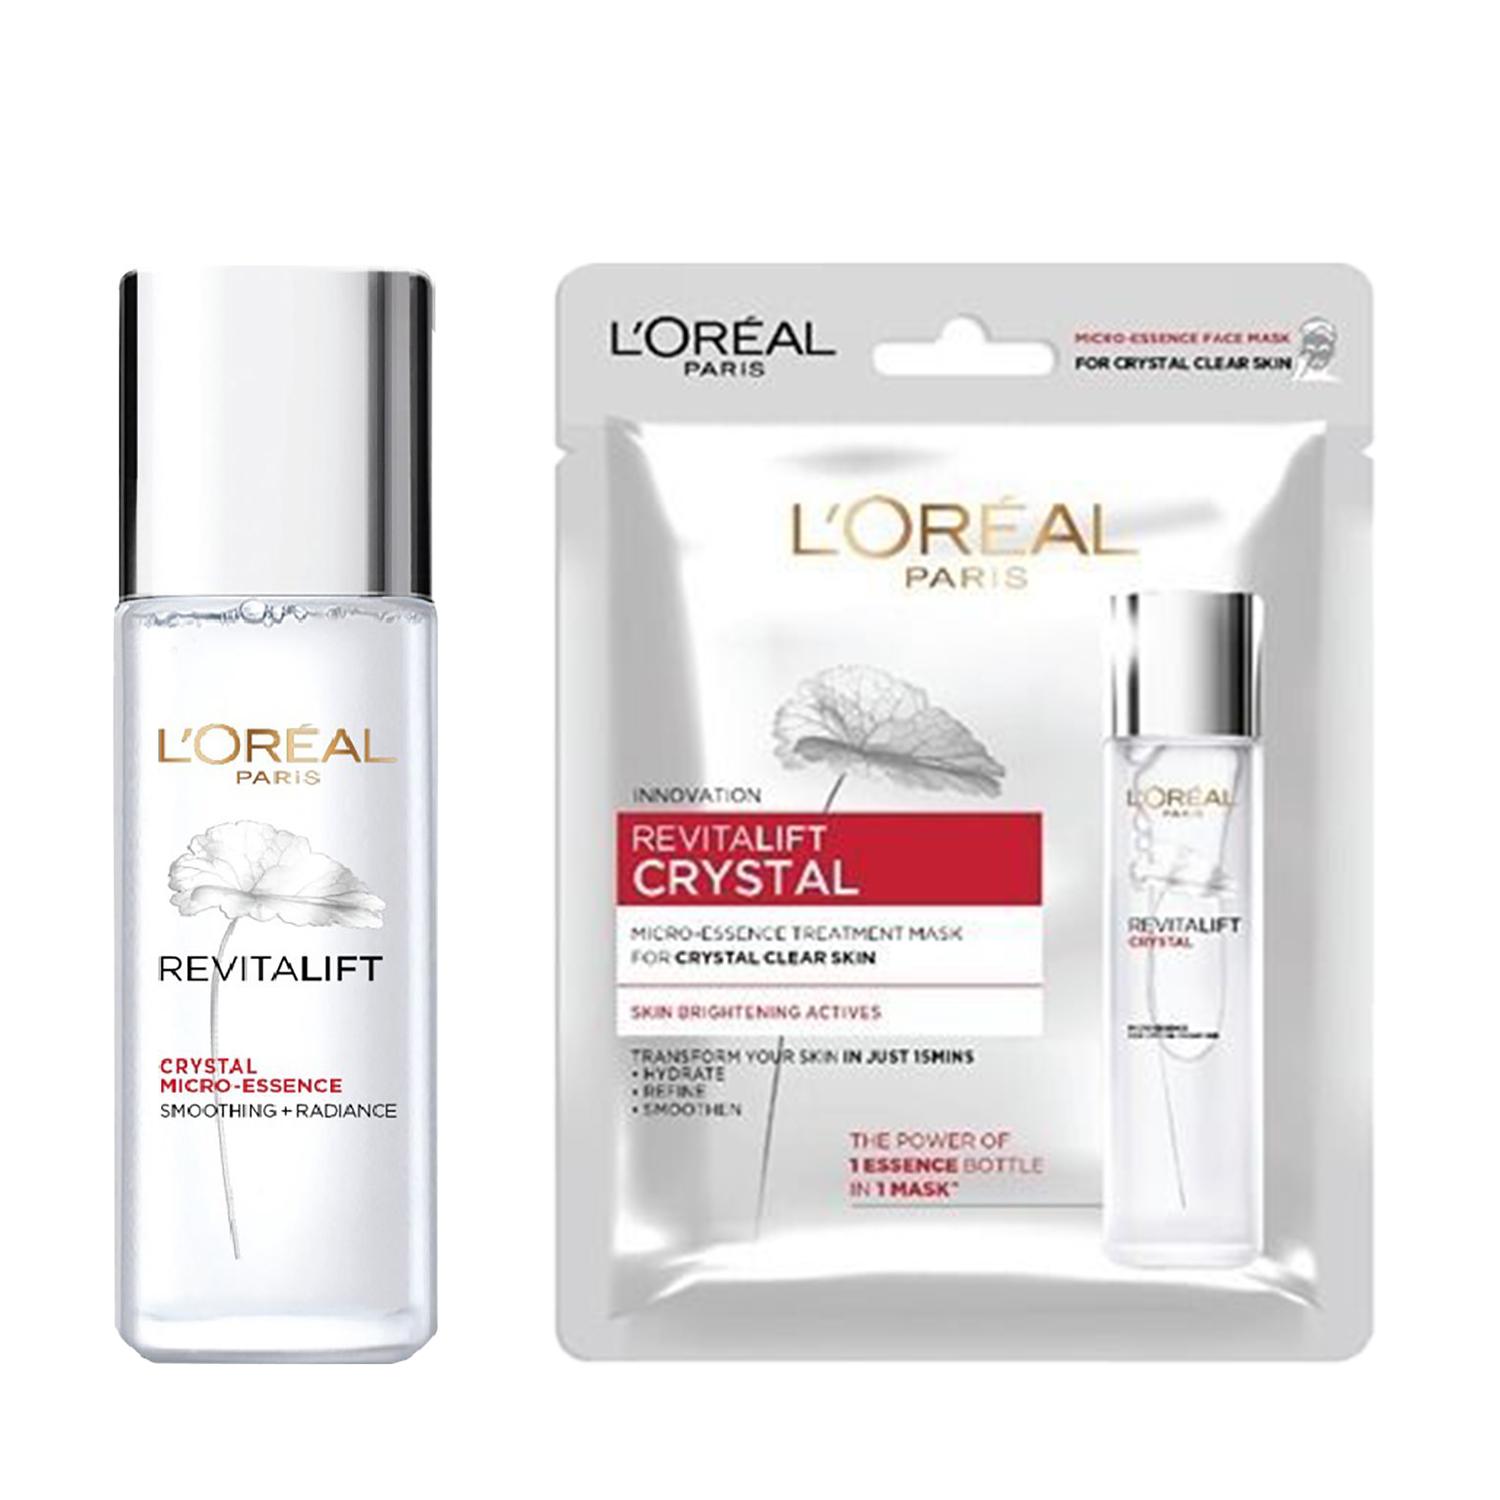 L'Oreal Paris | L'Oreal Paris Crystal Clear Skin Combo - Pack of 2 (Micro-essence & Sheet Mask)